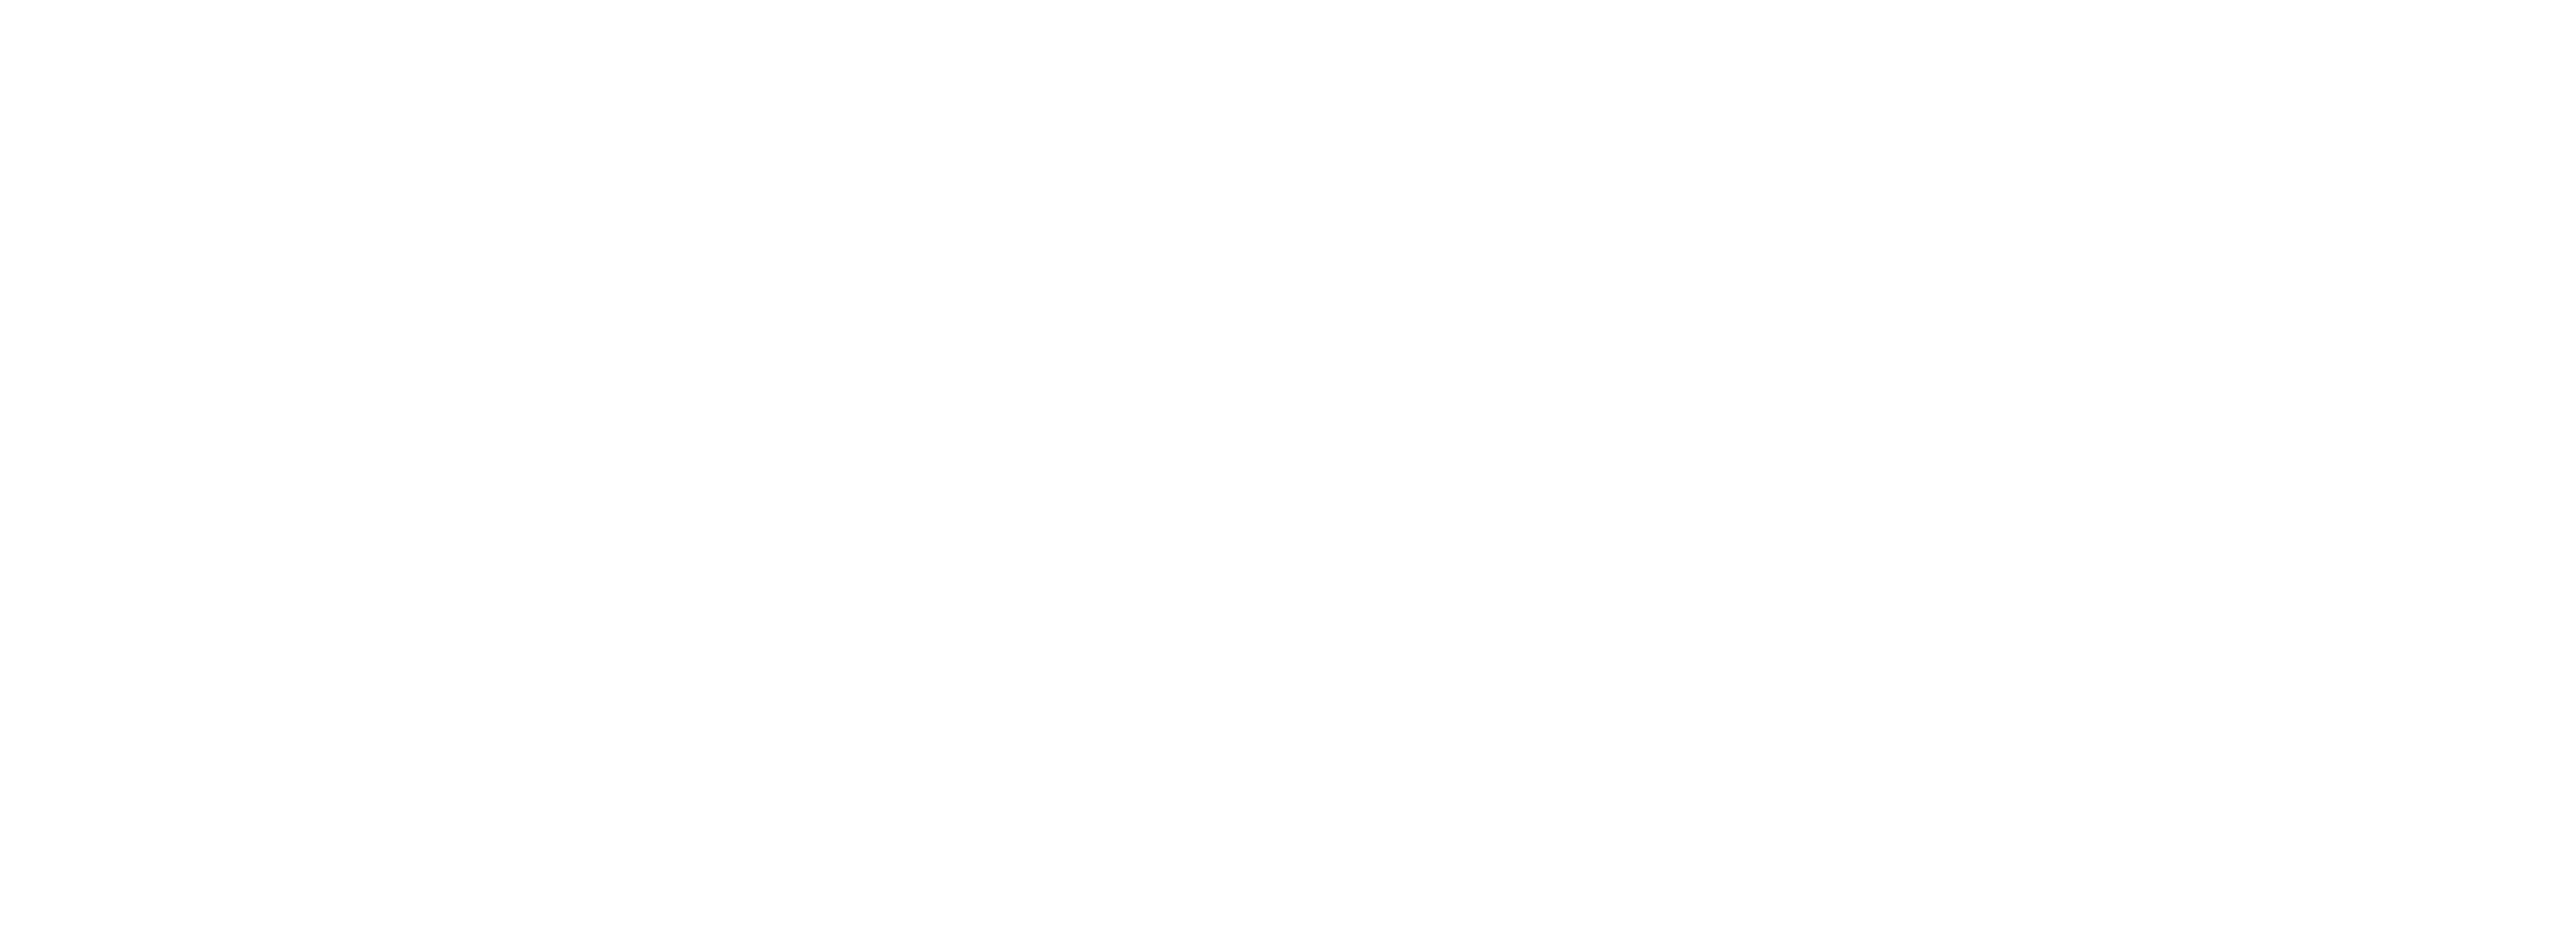 Women's Health Professional Care